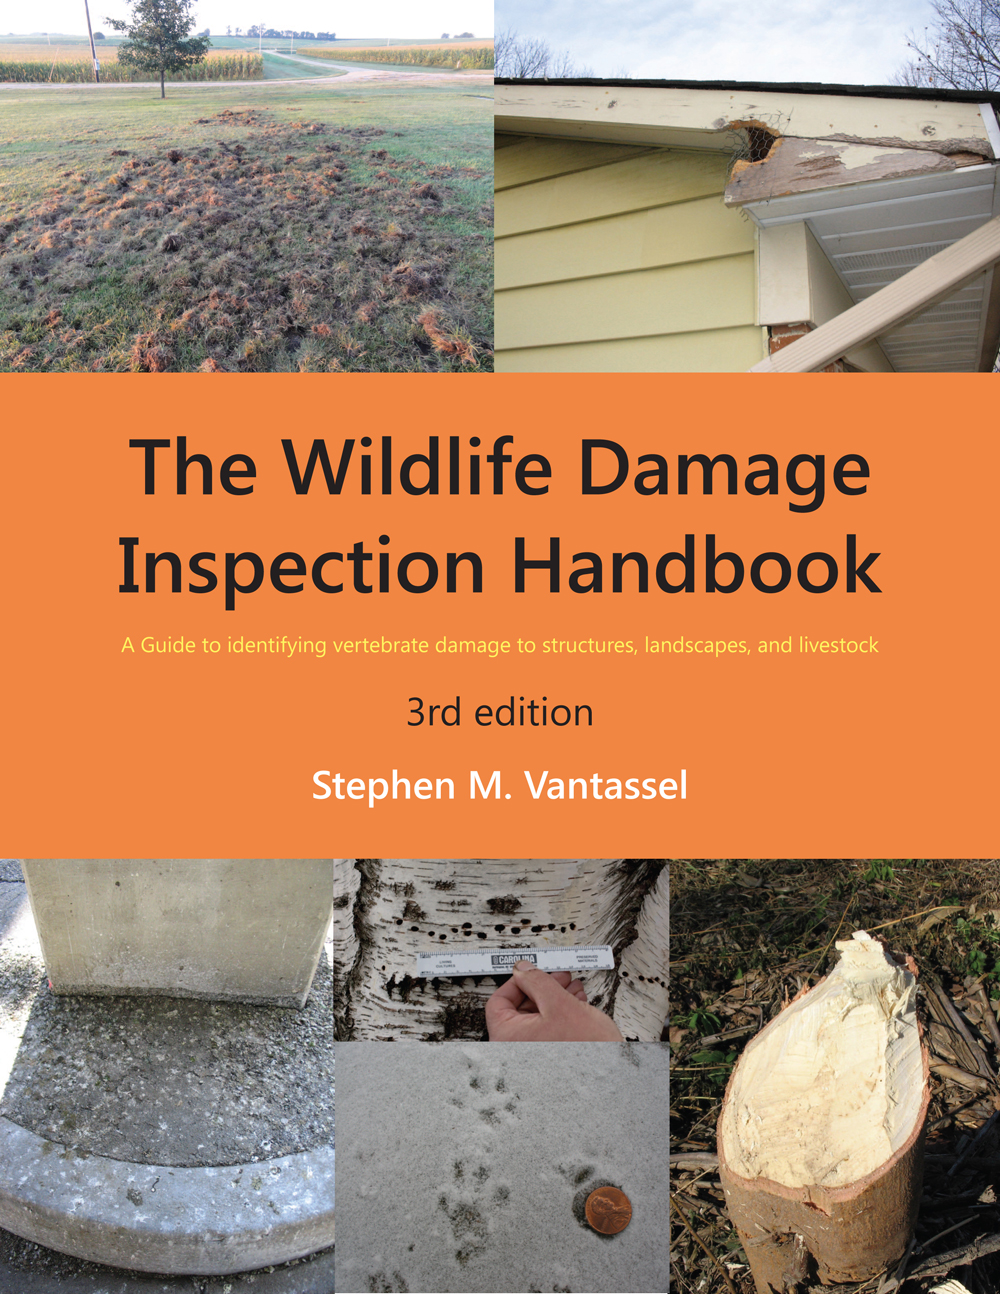 The Wildlife Damage Inspection Handbook